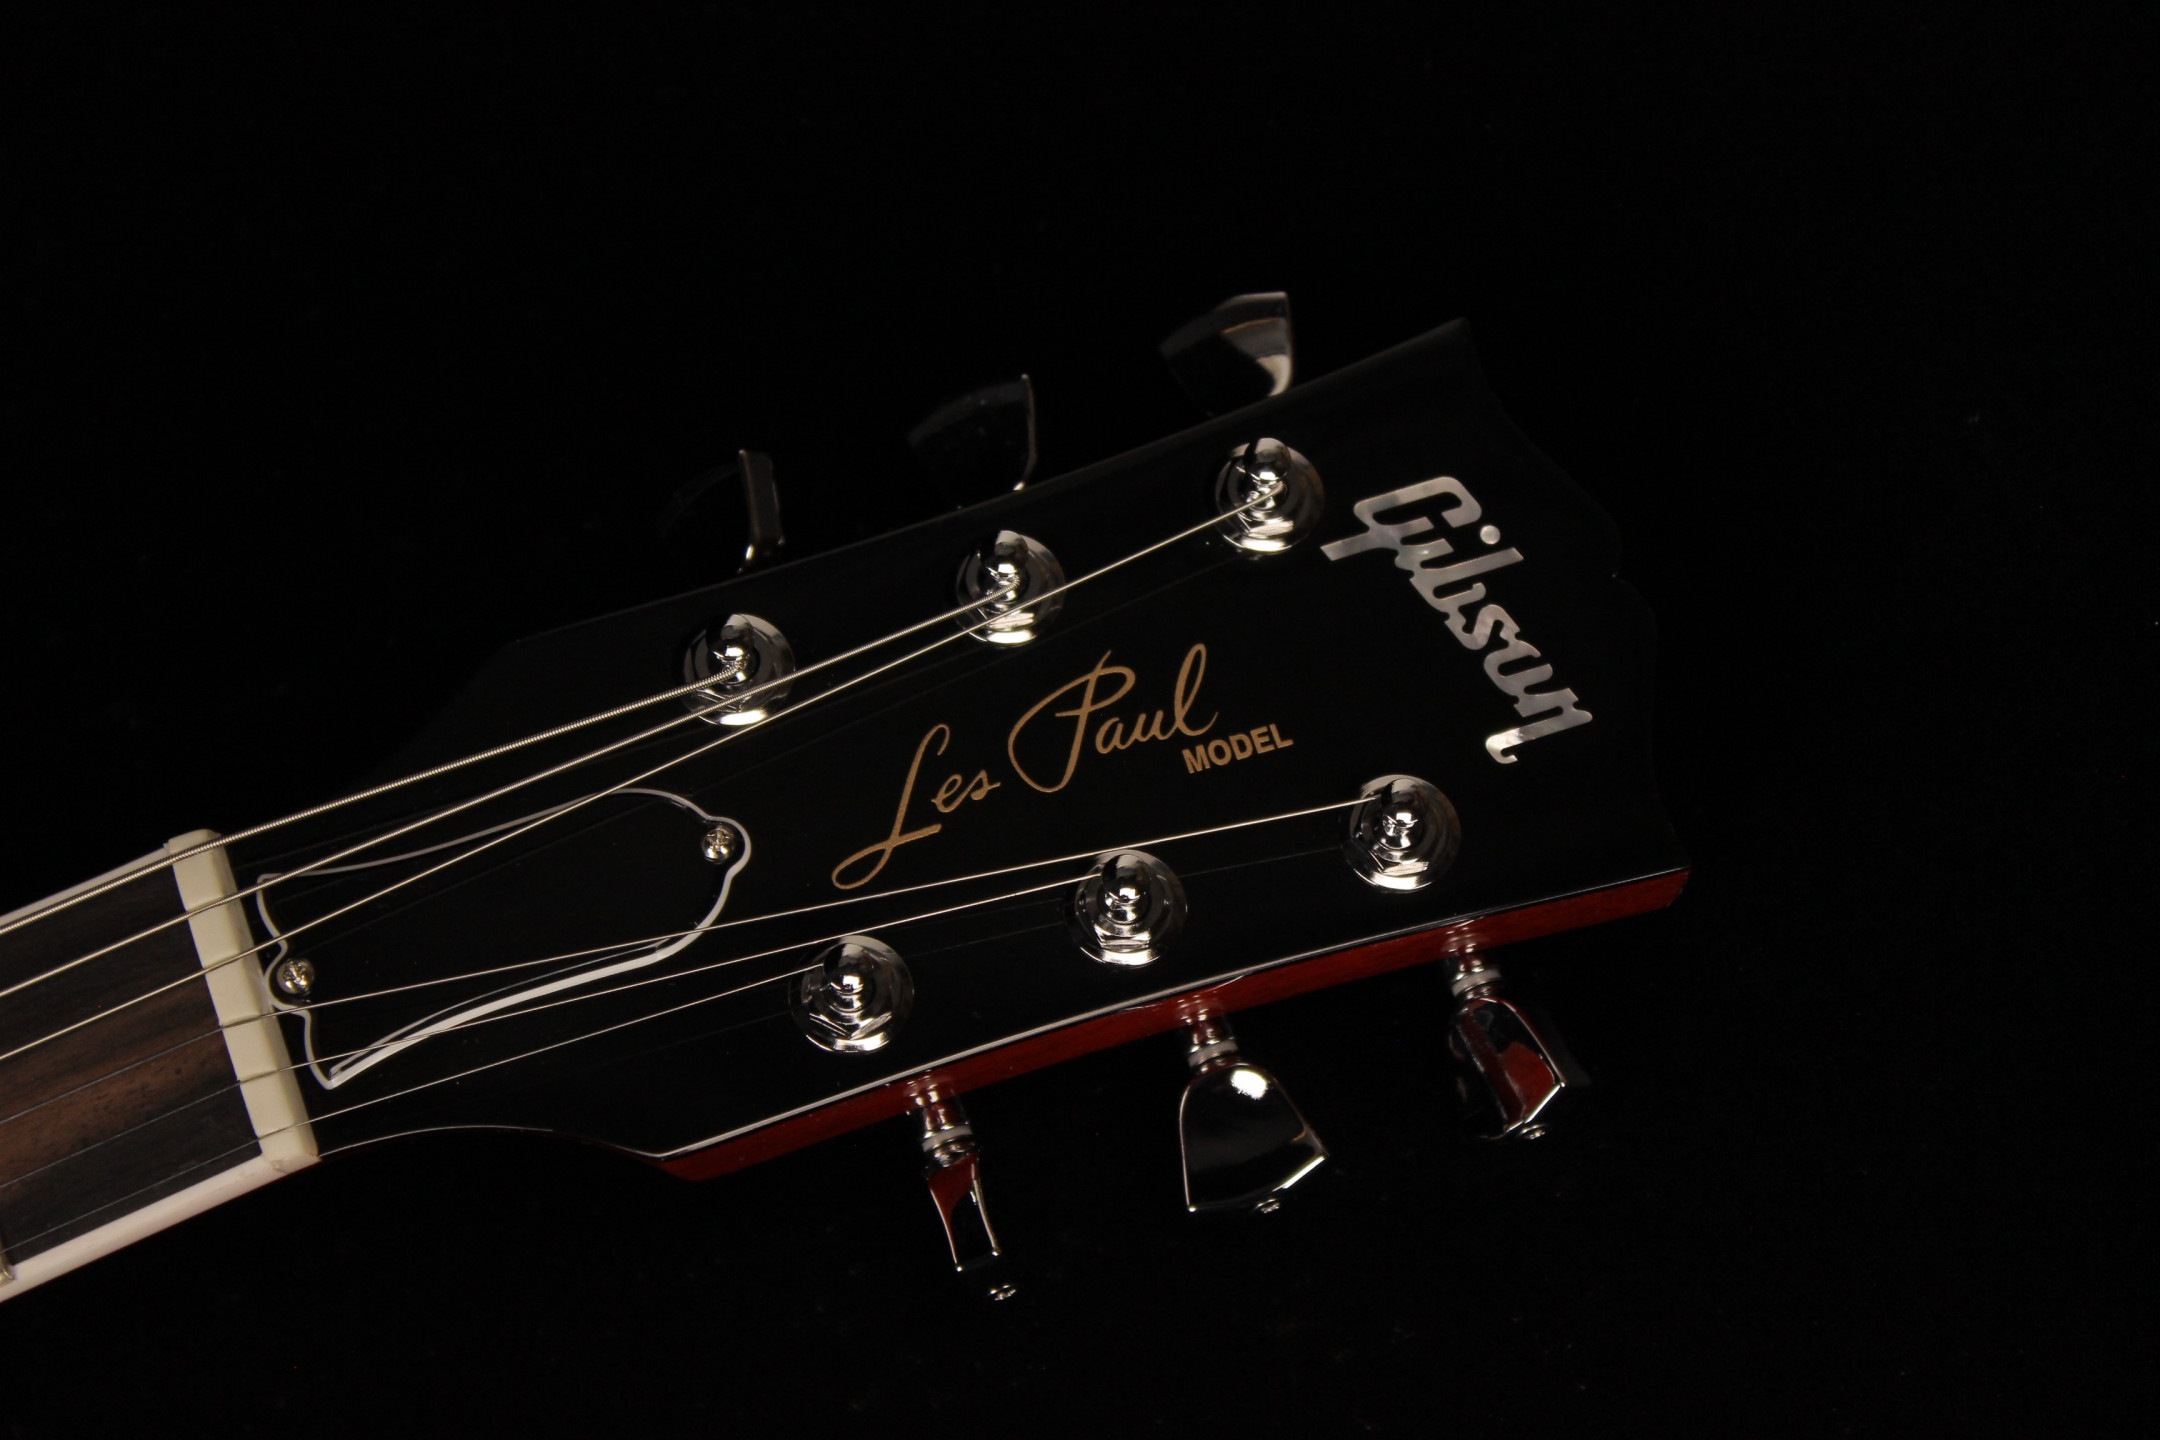 Gibson Les Paul Modern Figured Cherry Burst (SN: 224430237) | Gino 